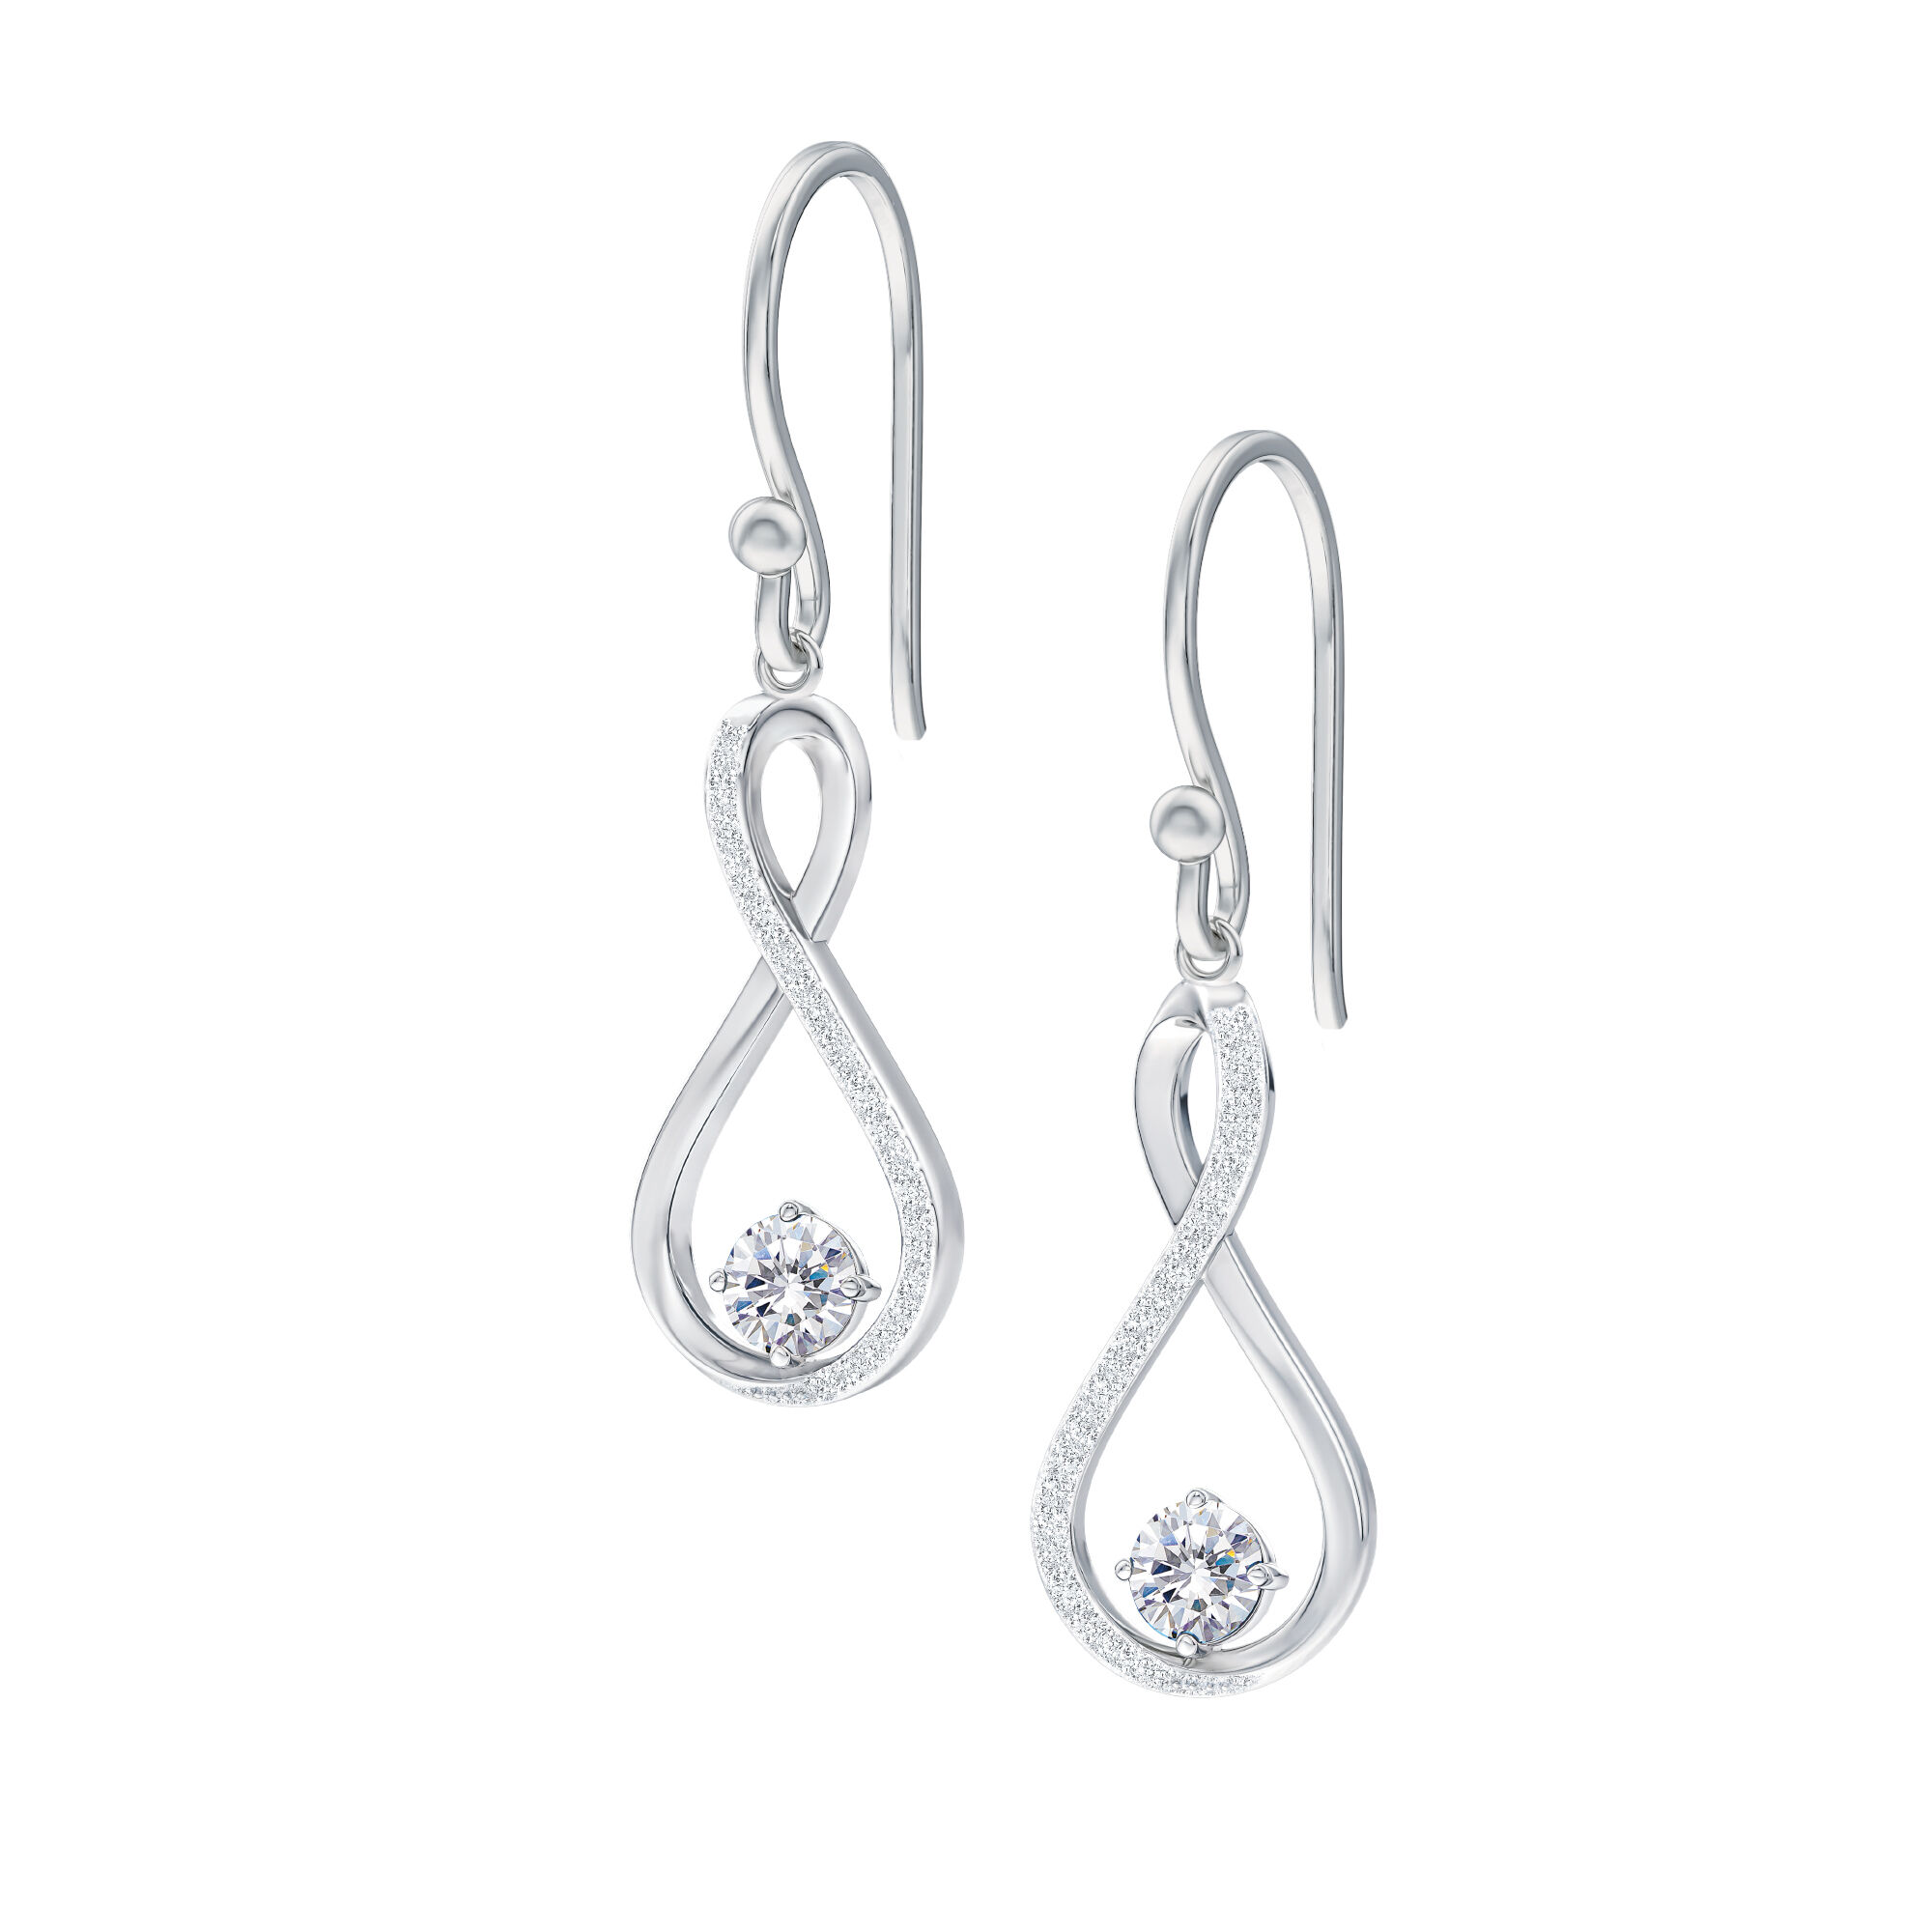 Birthstone and Diamond Earrings 5200 0056 d april